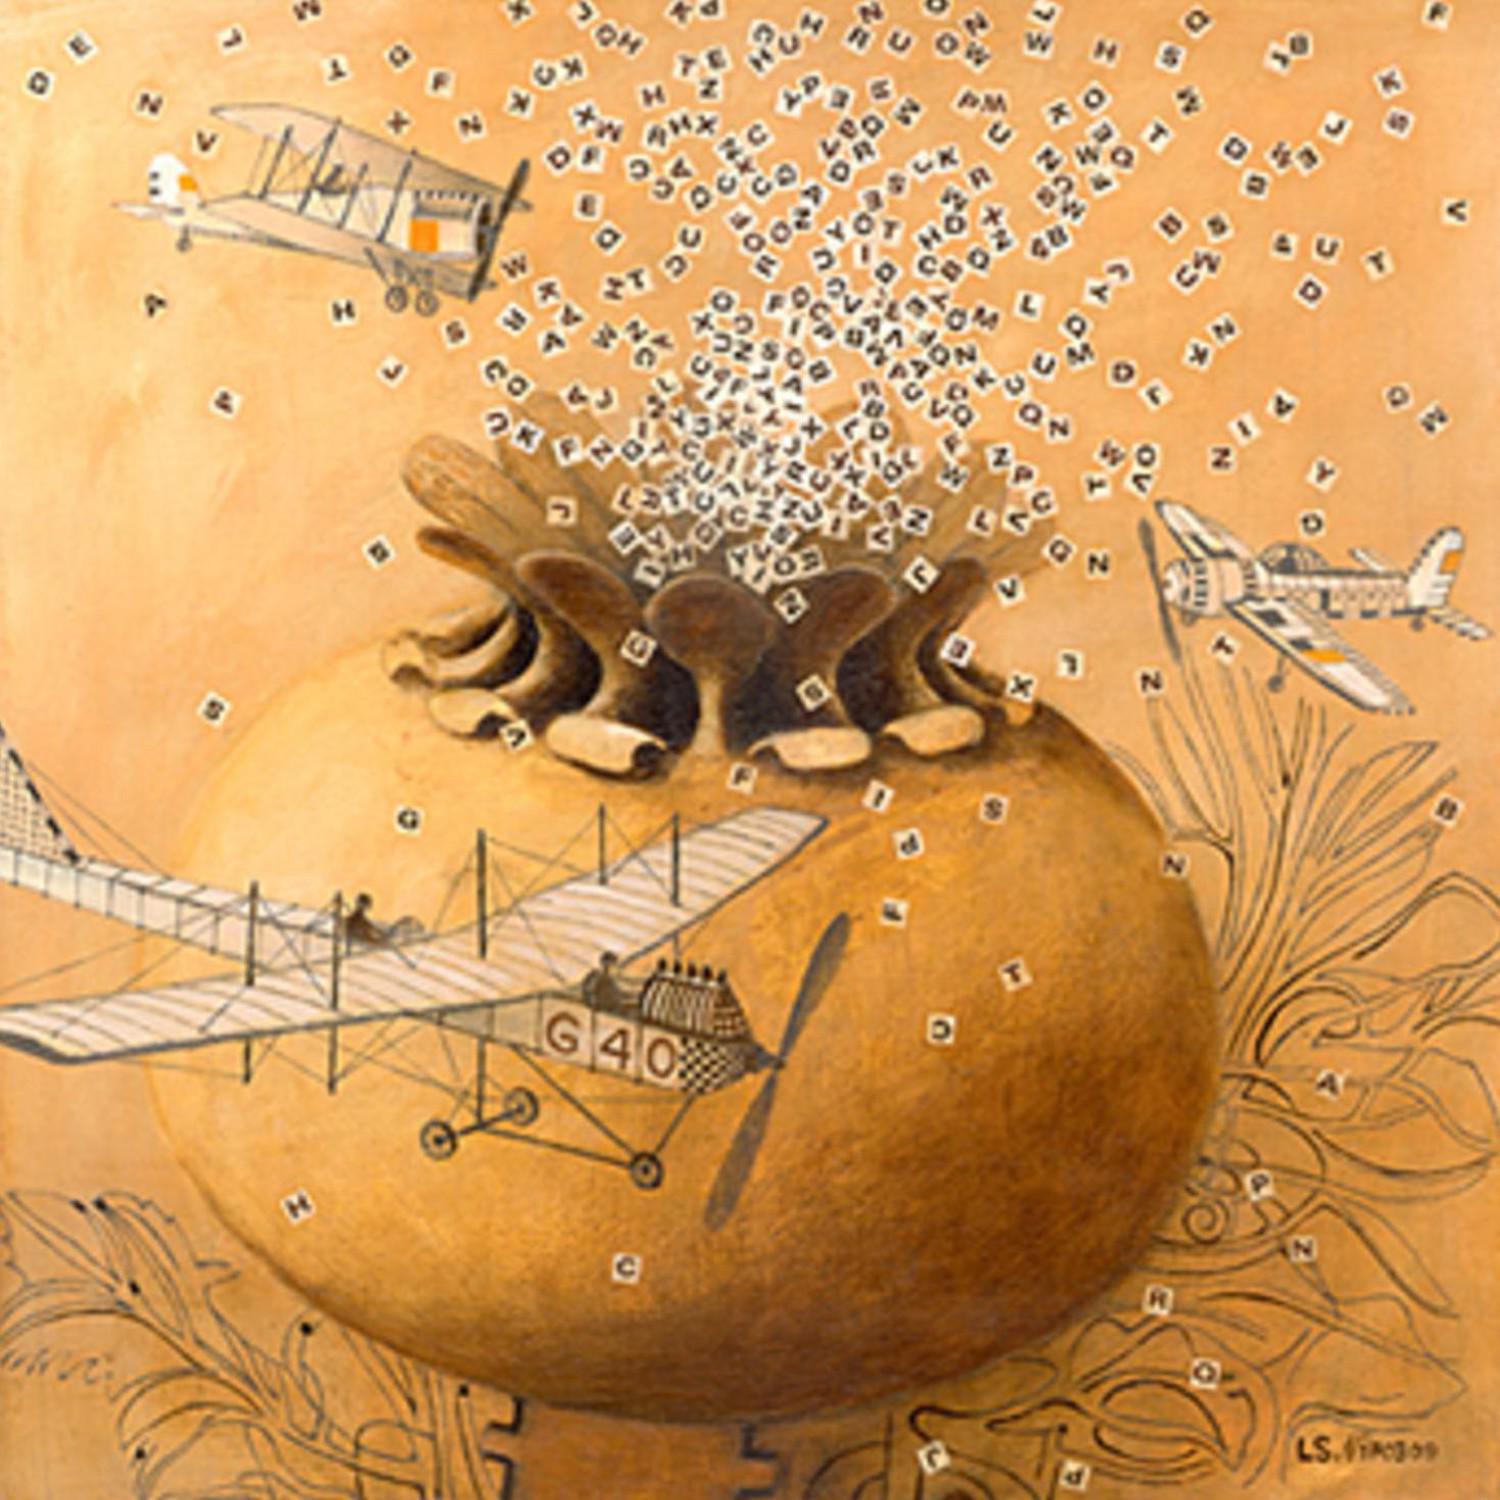 Spin-s (Песни кузнечиков). Сергей Колеватых. 2009, giclee, 50x50